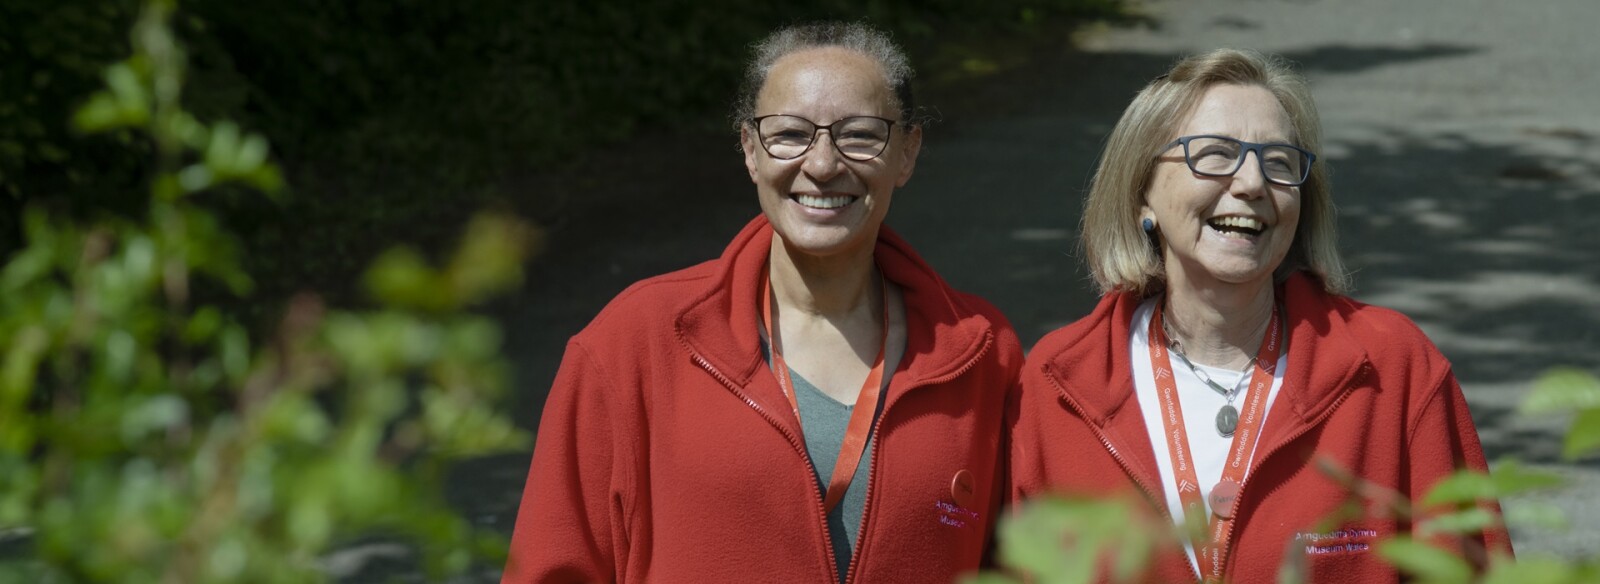 Two volunteers wearing red volunteering fleeces, smiling at the camera. 